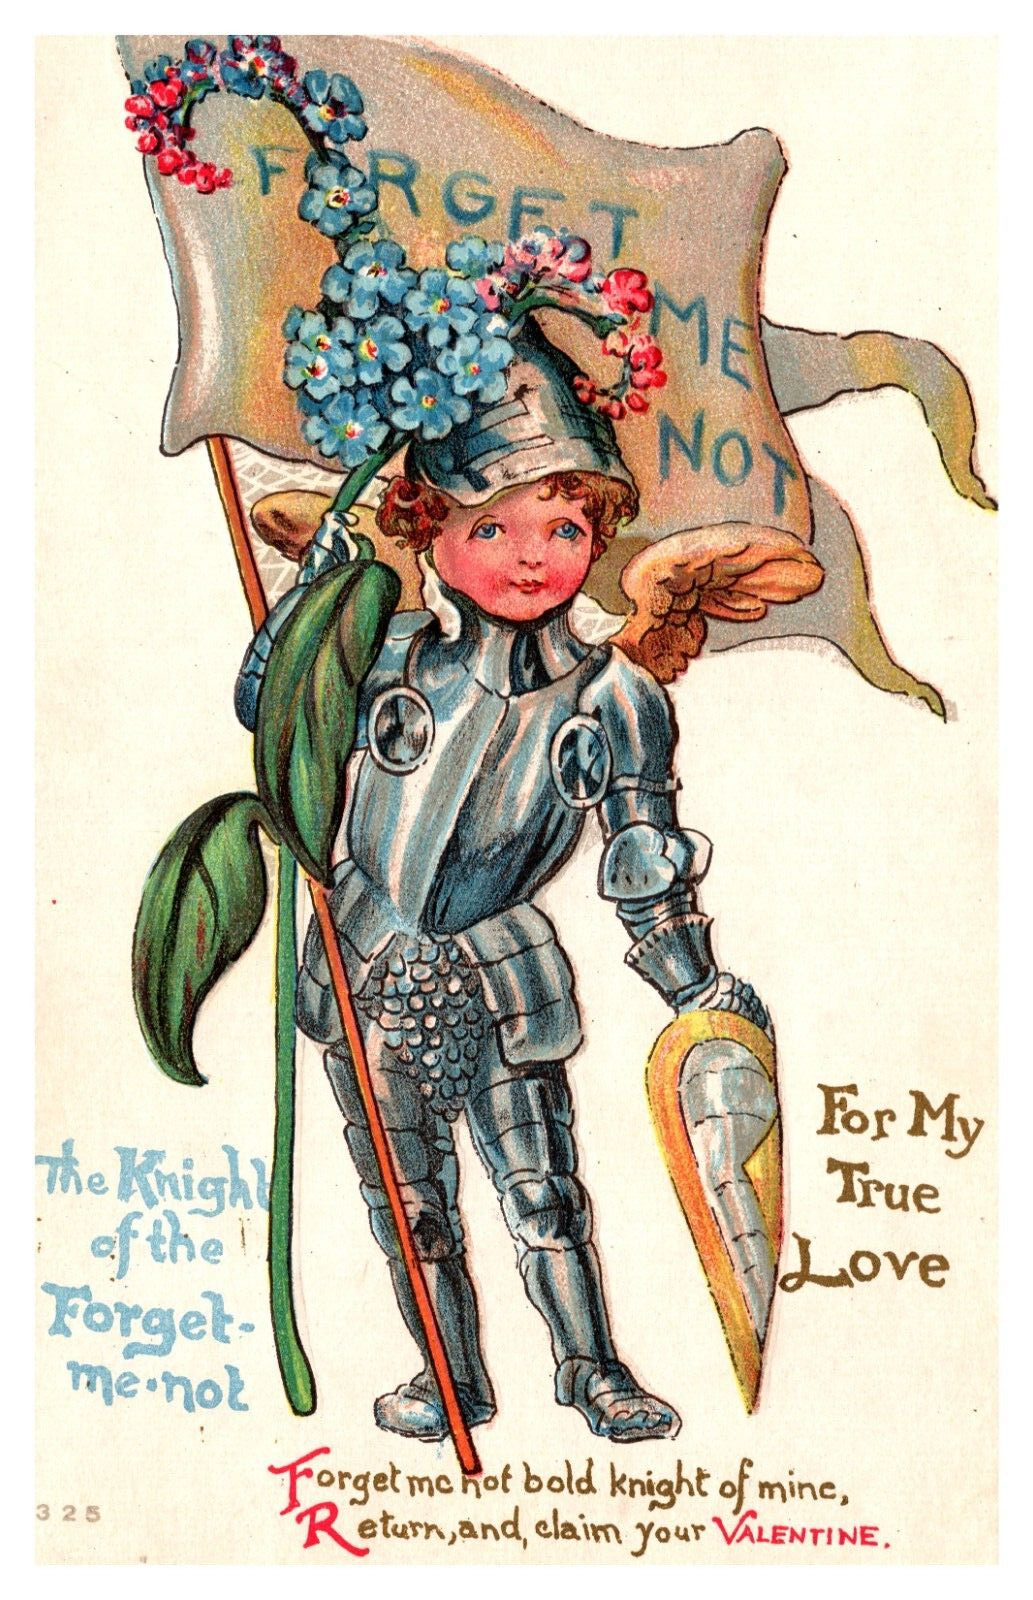 ARTIST IMPRESSION 1911 VALENTINE KNIGHT SHINING ARMOR ROMANCE POSTCARD #245